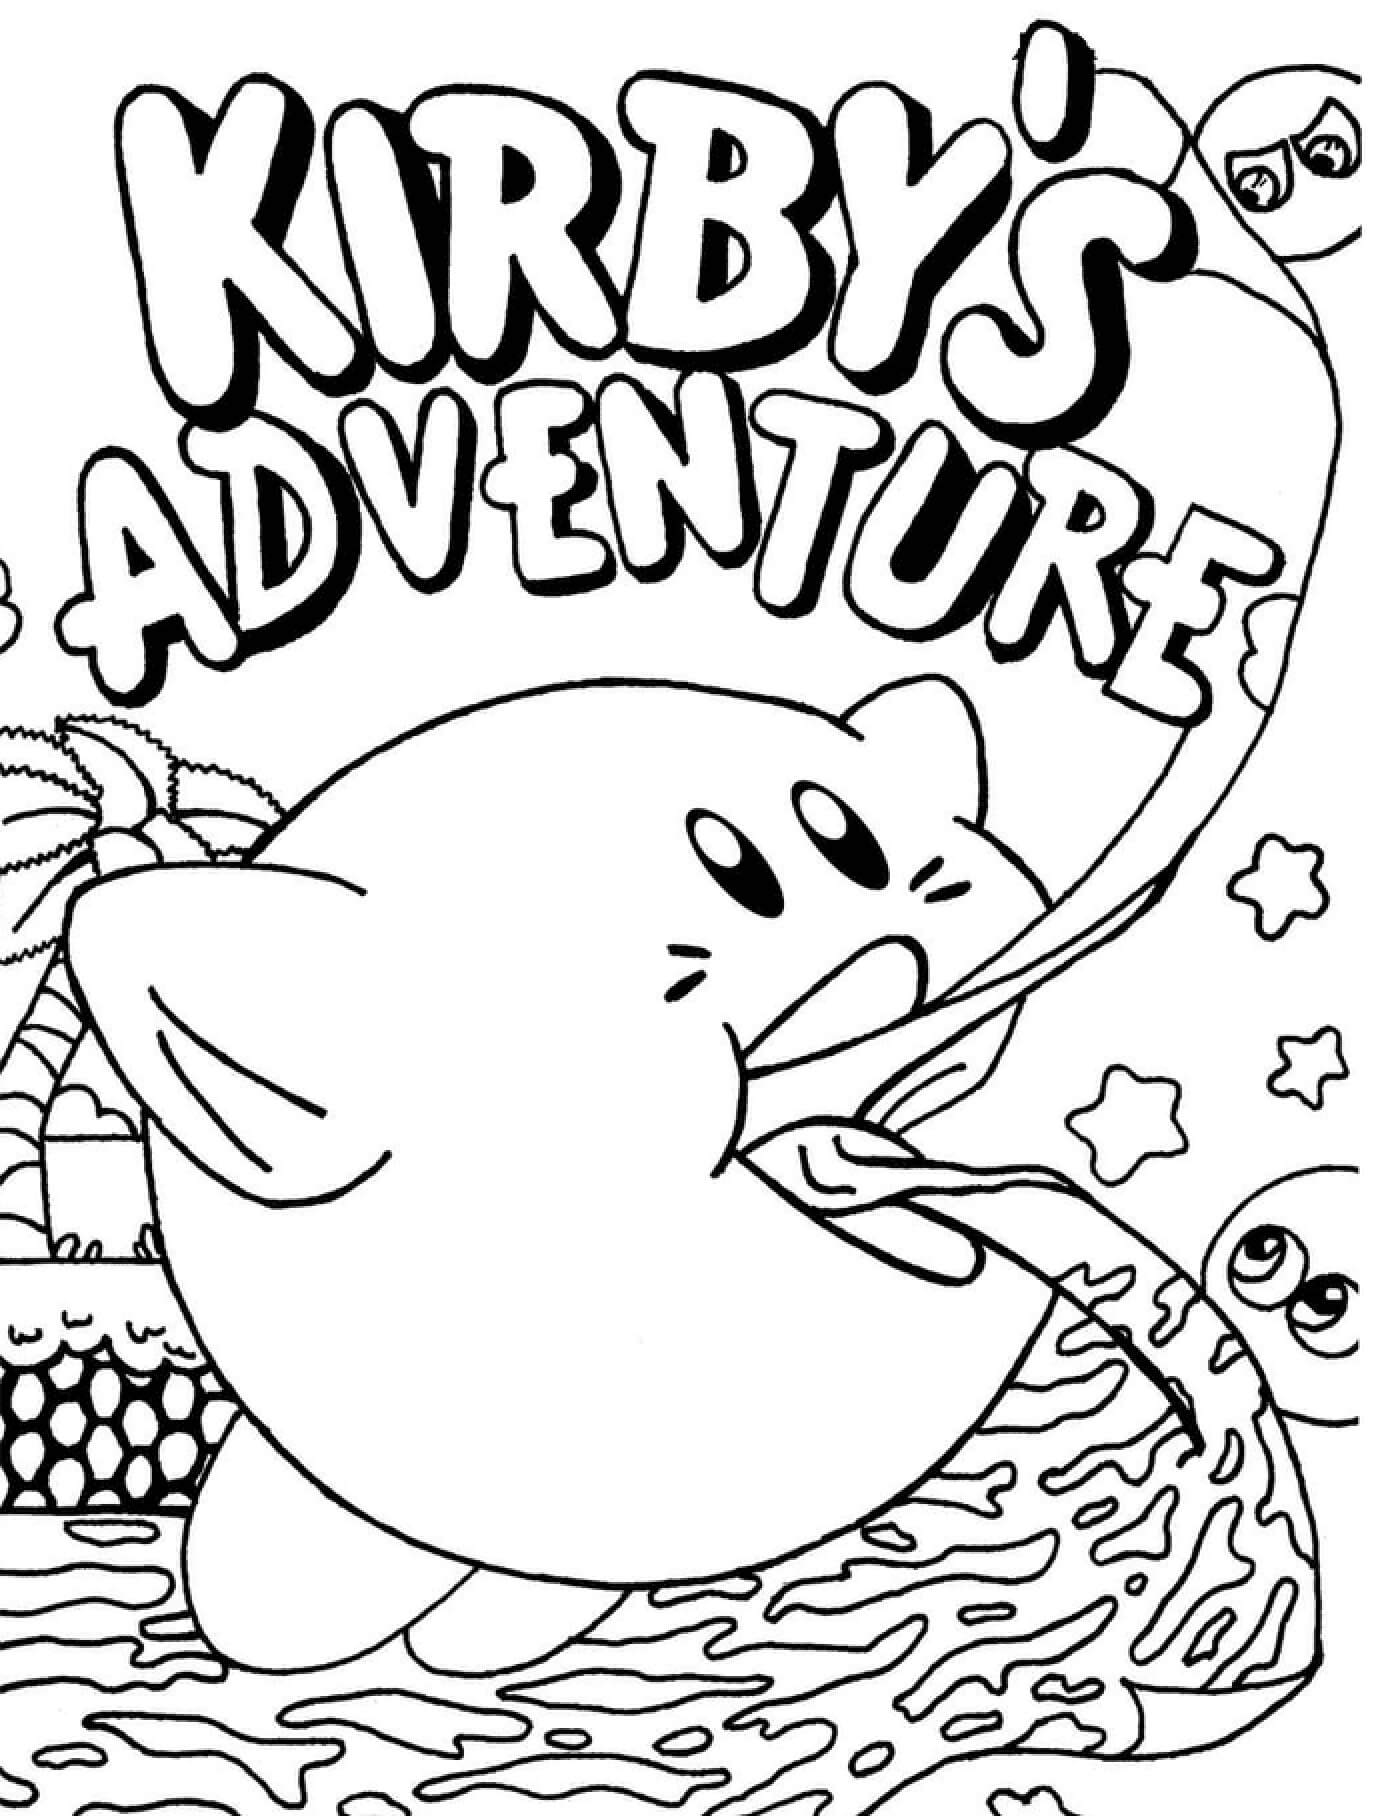 La Aventura de Kirby